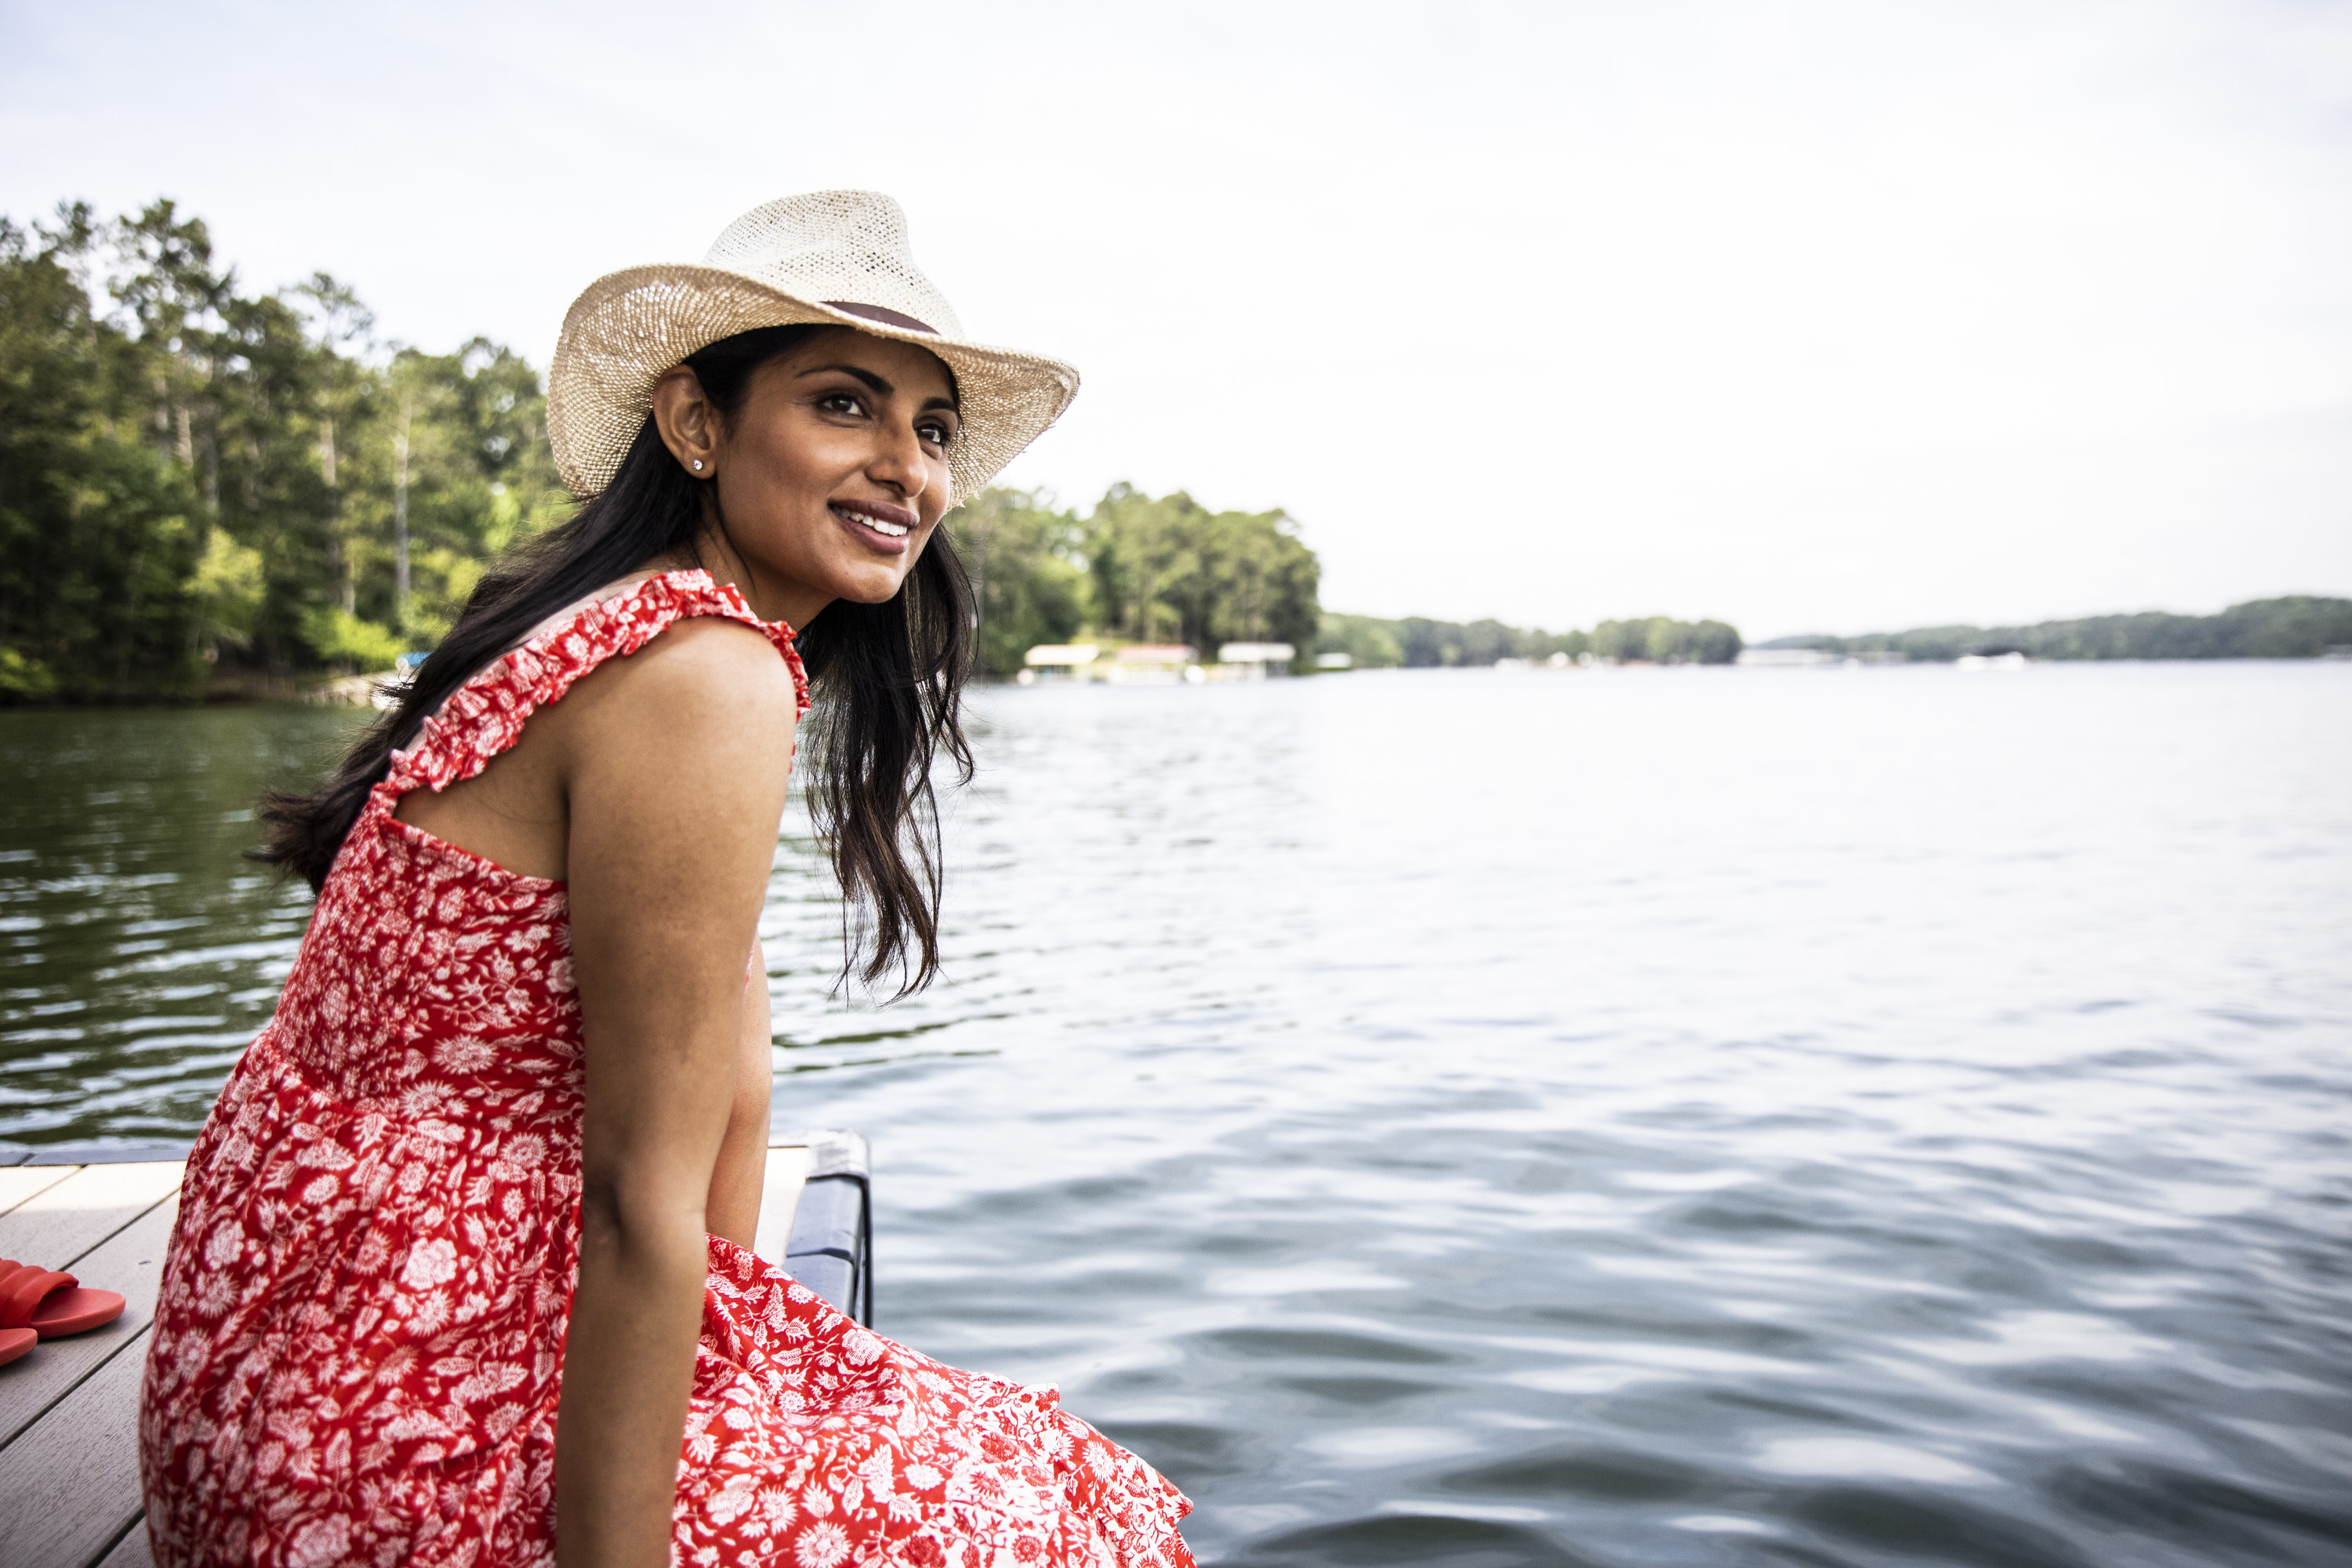 A woman sits on a dock by a lake